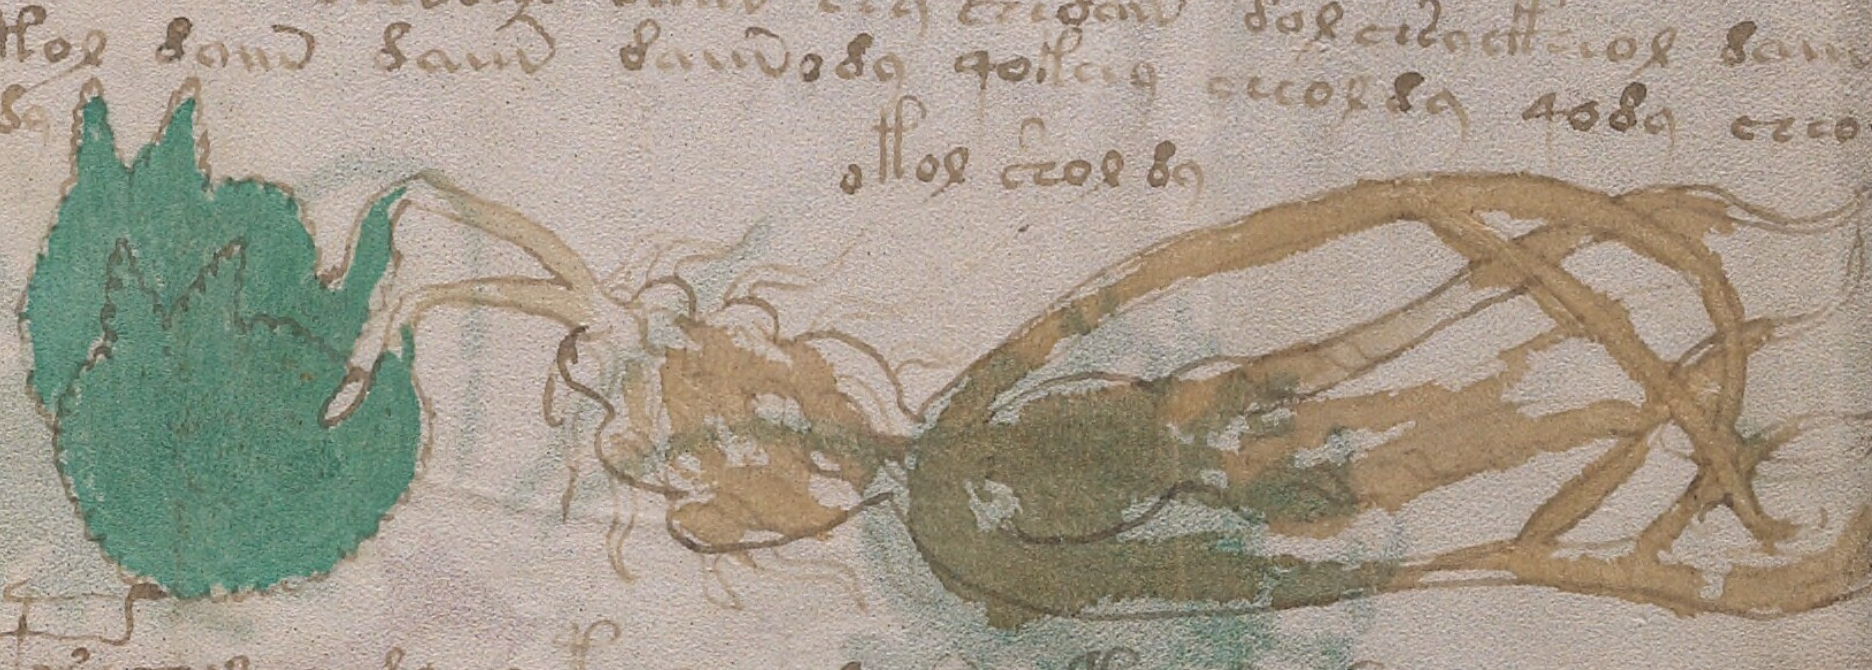 Voynich Manuscript small humanoid plant maybe mandrake